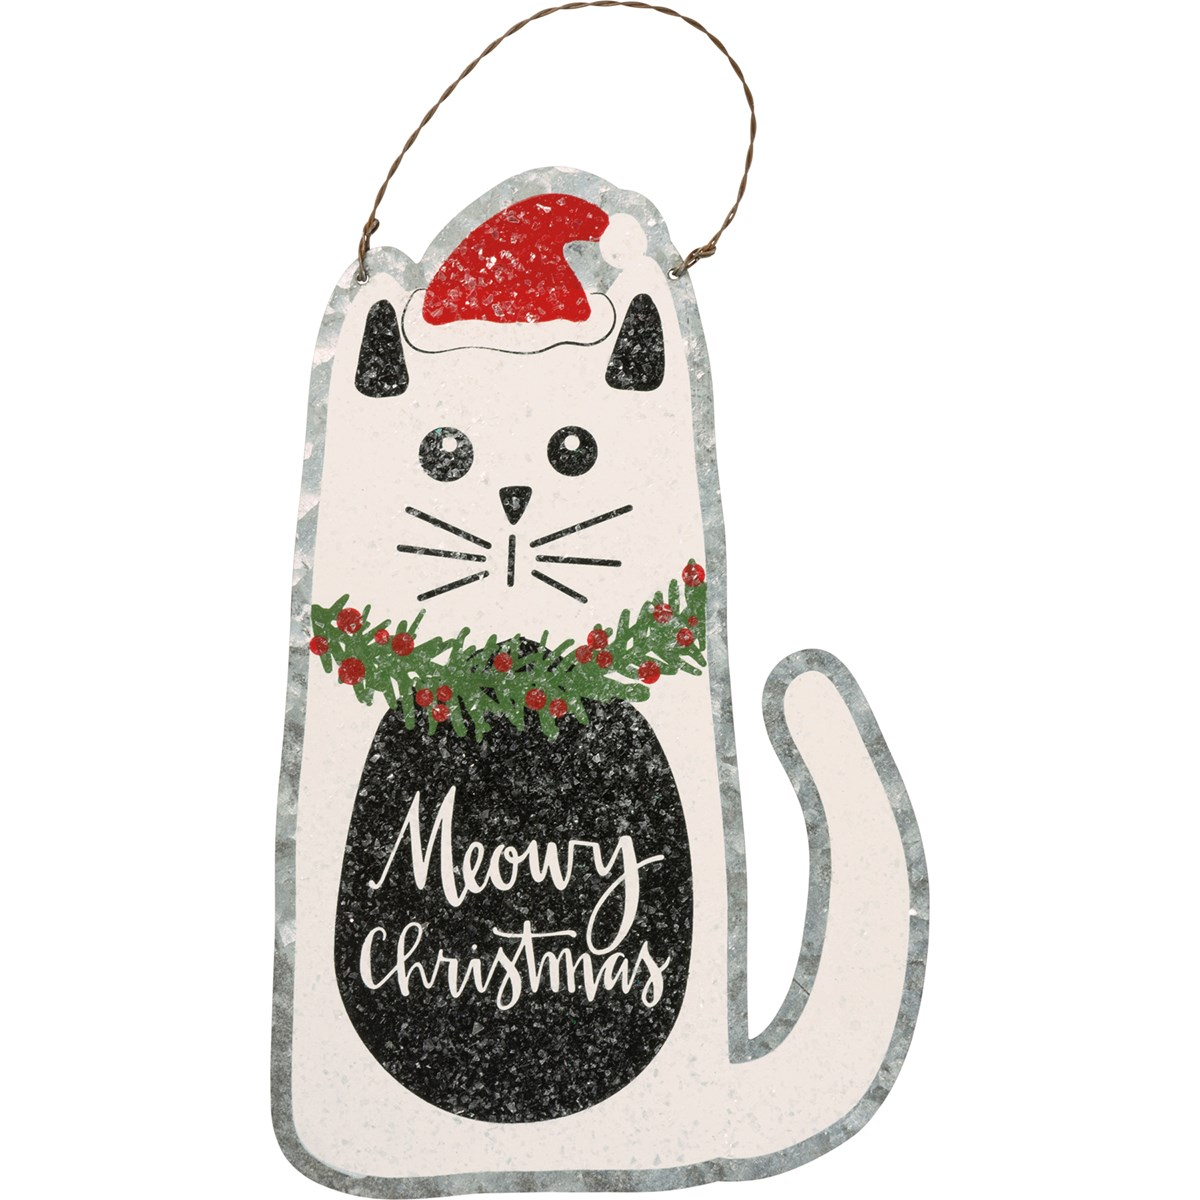 “Meowy Christmas” Cat Ornament